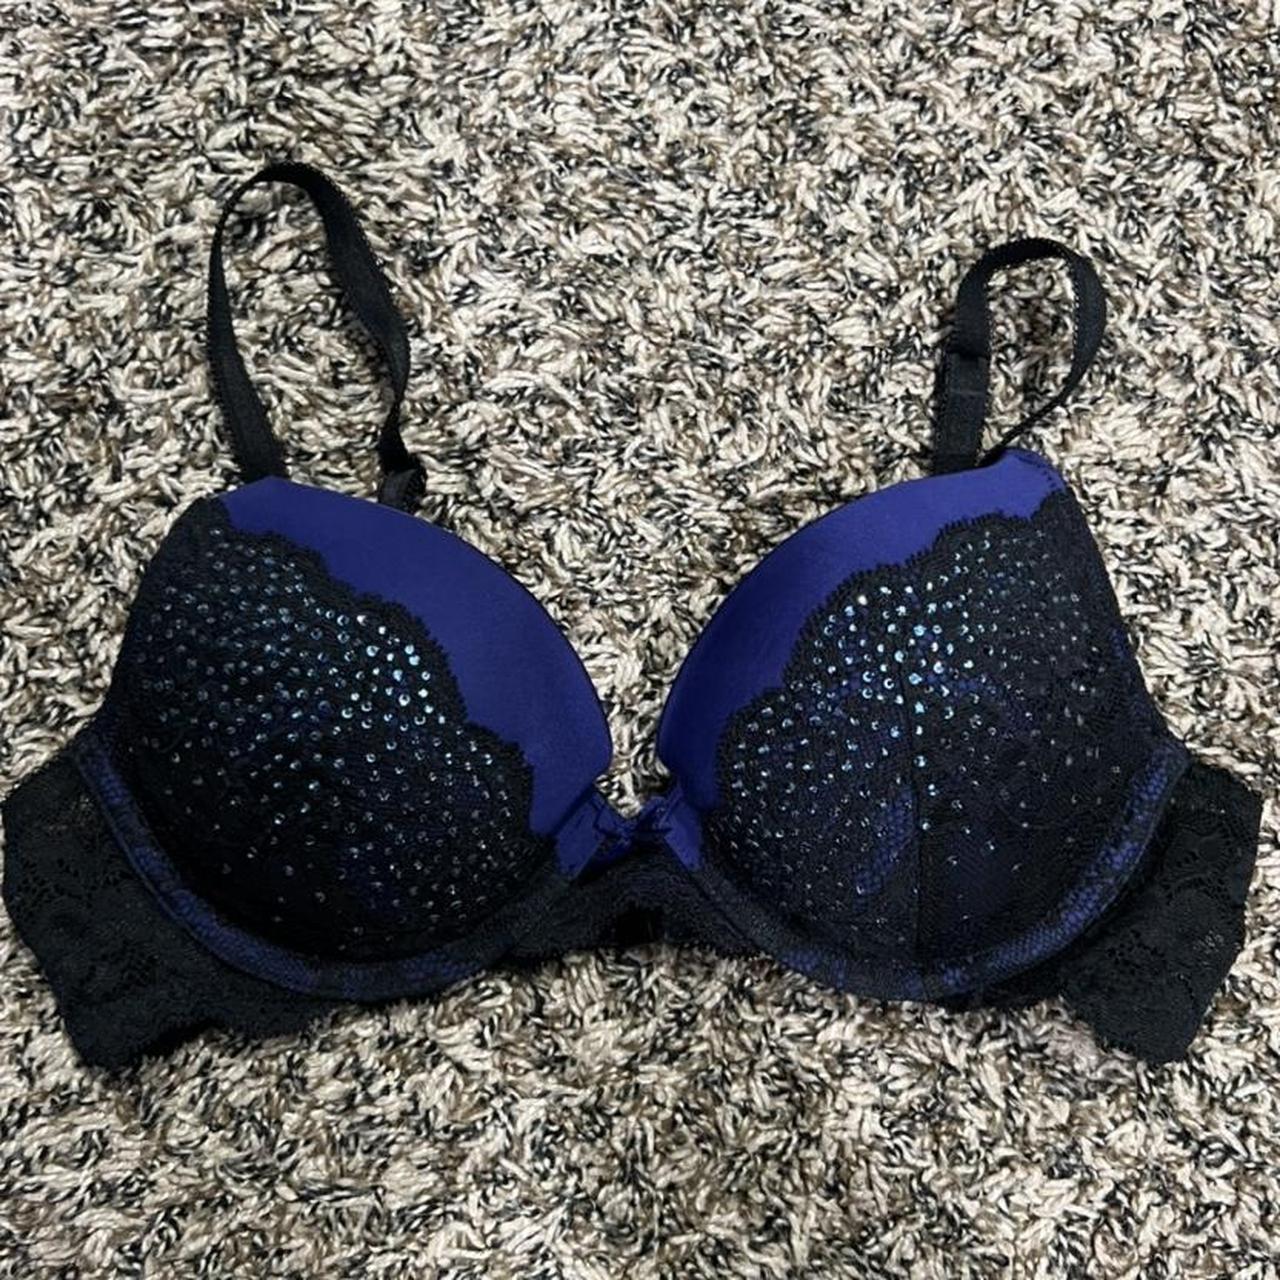 Stunning Victoria's Secret Black & Cobalt Blue Uplift Bras